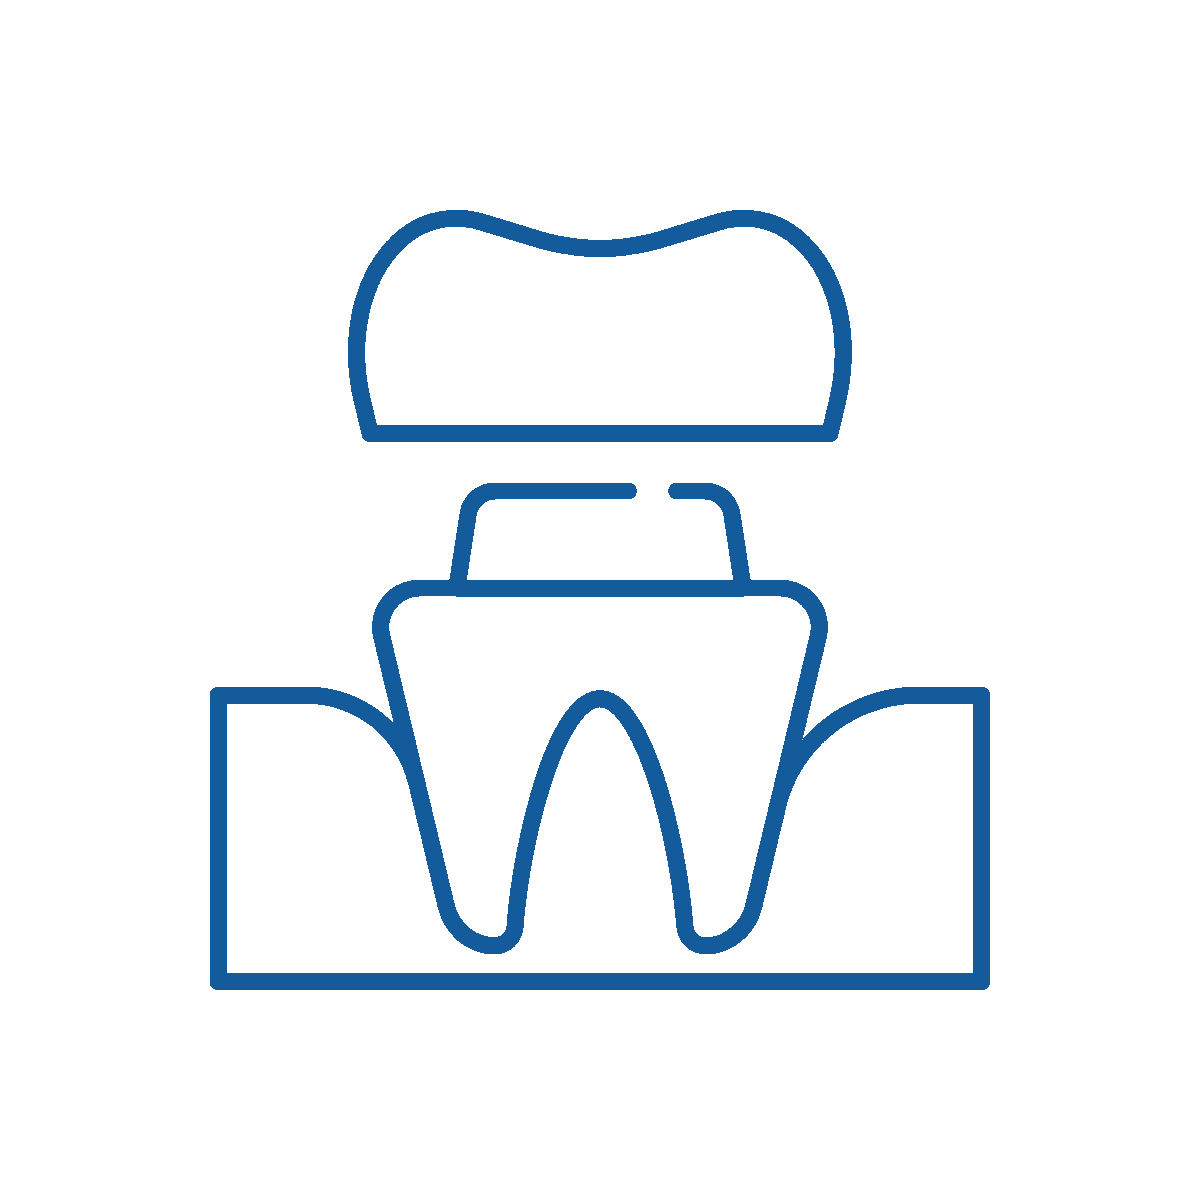 2d line art of a dental crown